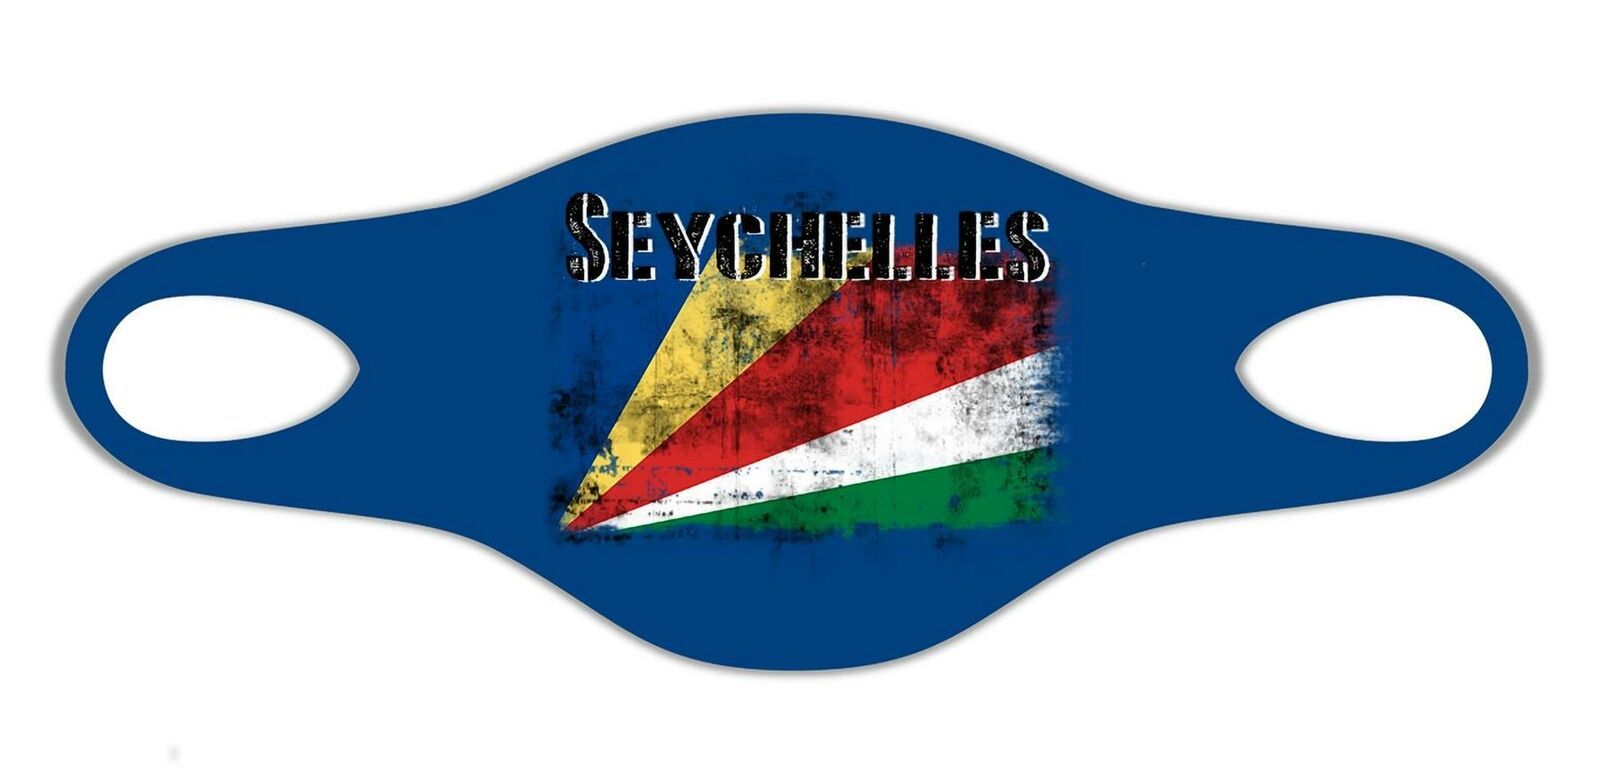 Seychelles National Flag Soft Face Mask Protective Reusable washable Breathable